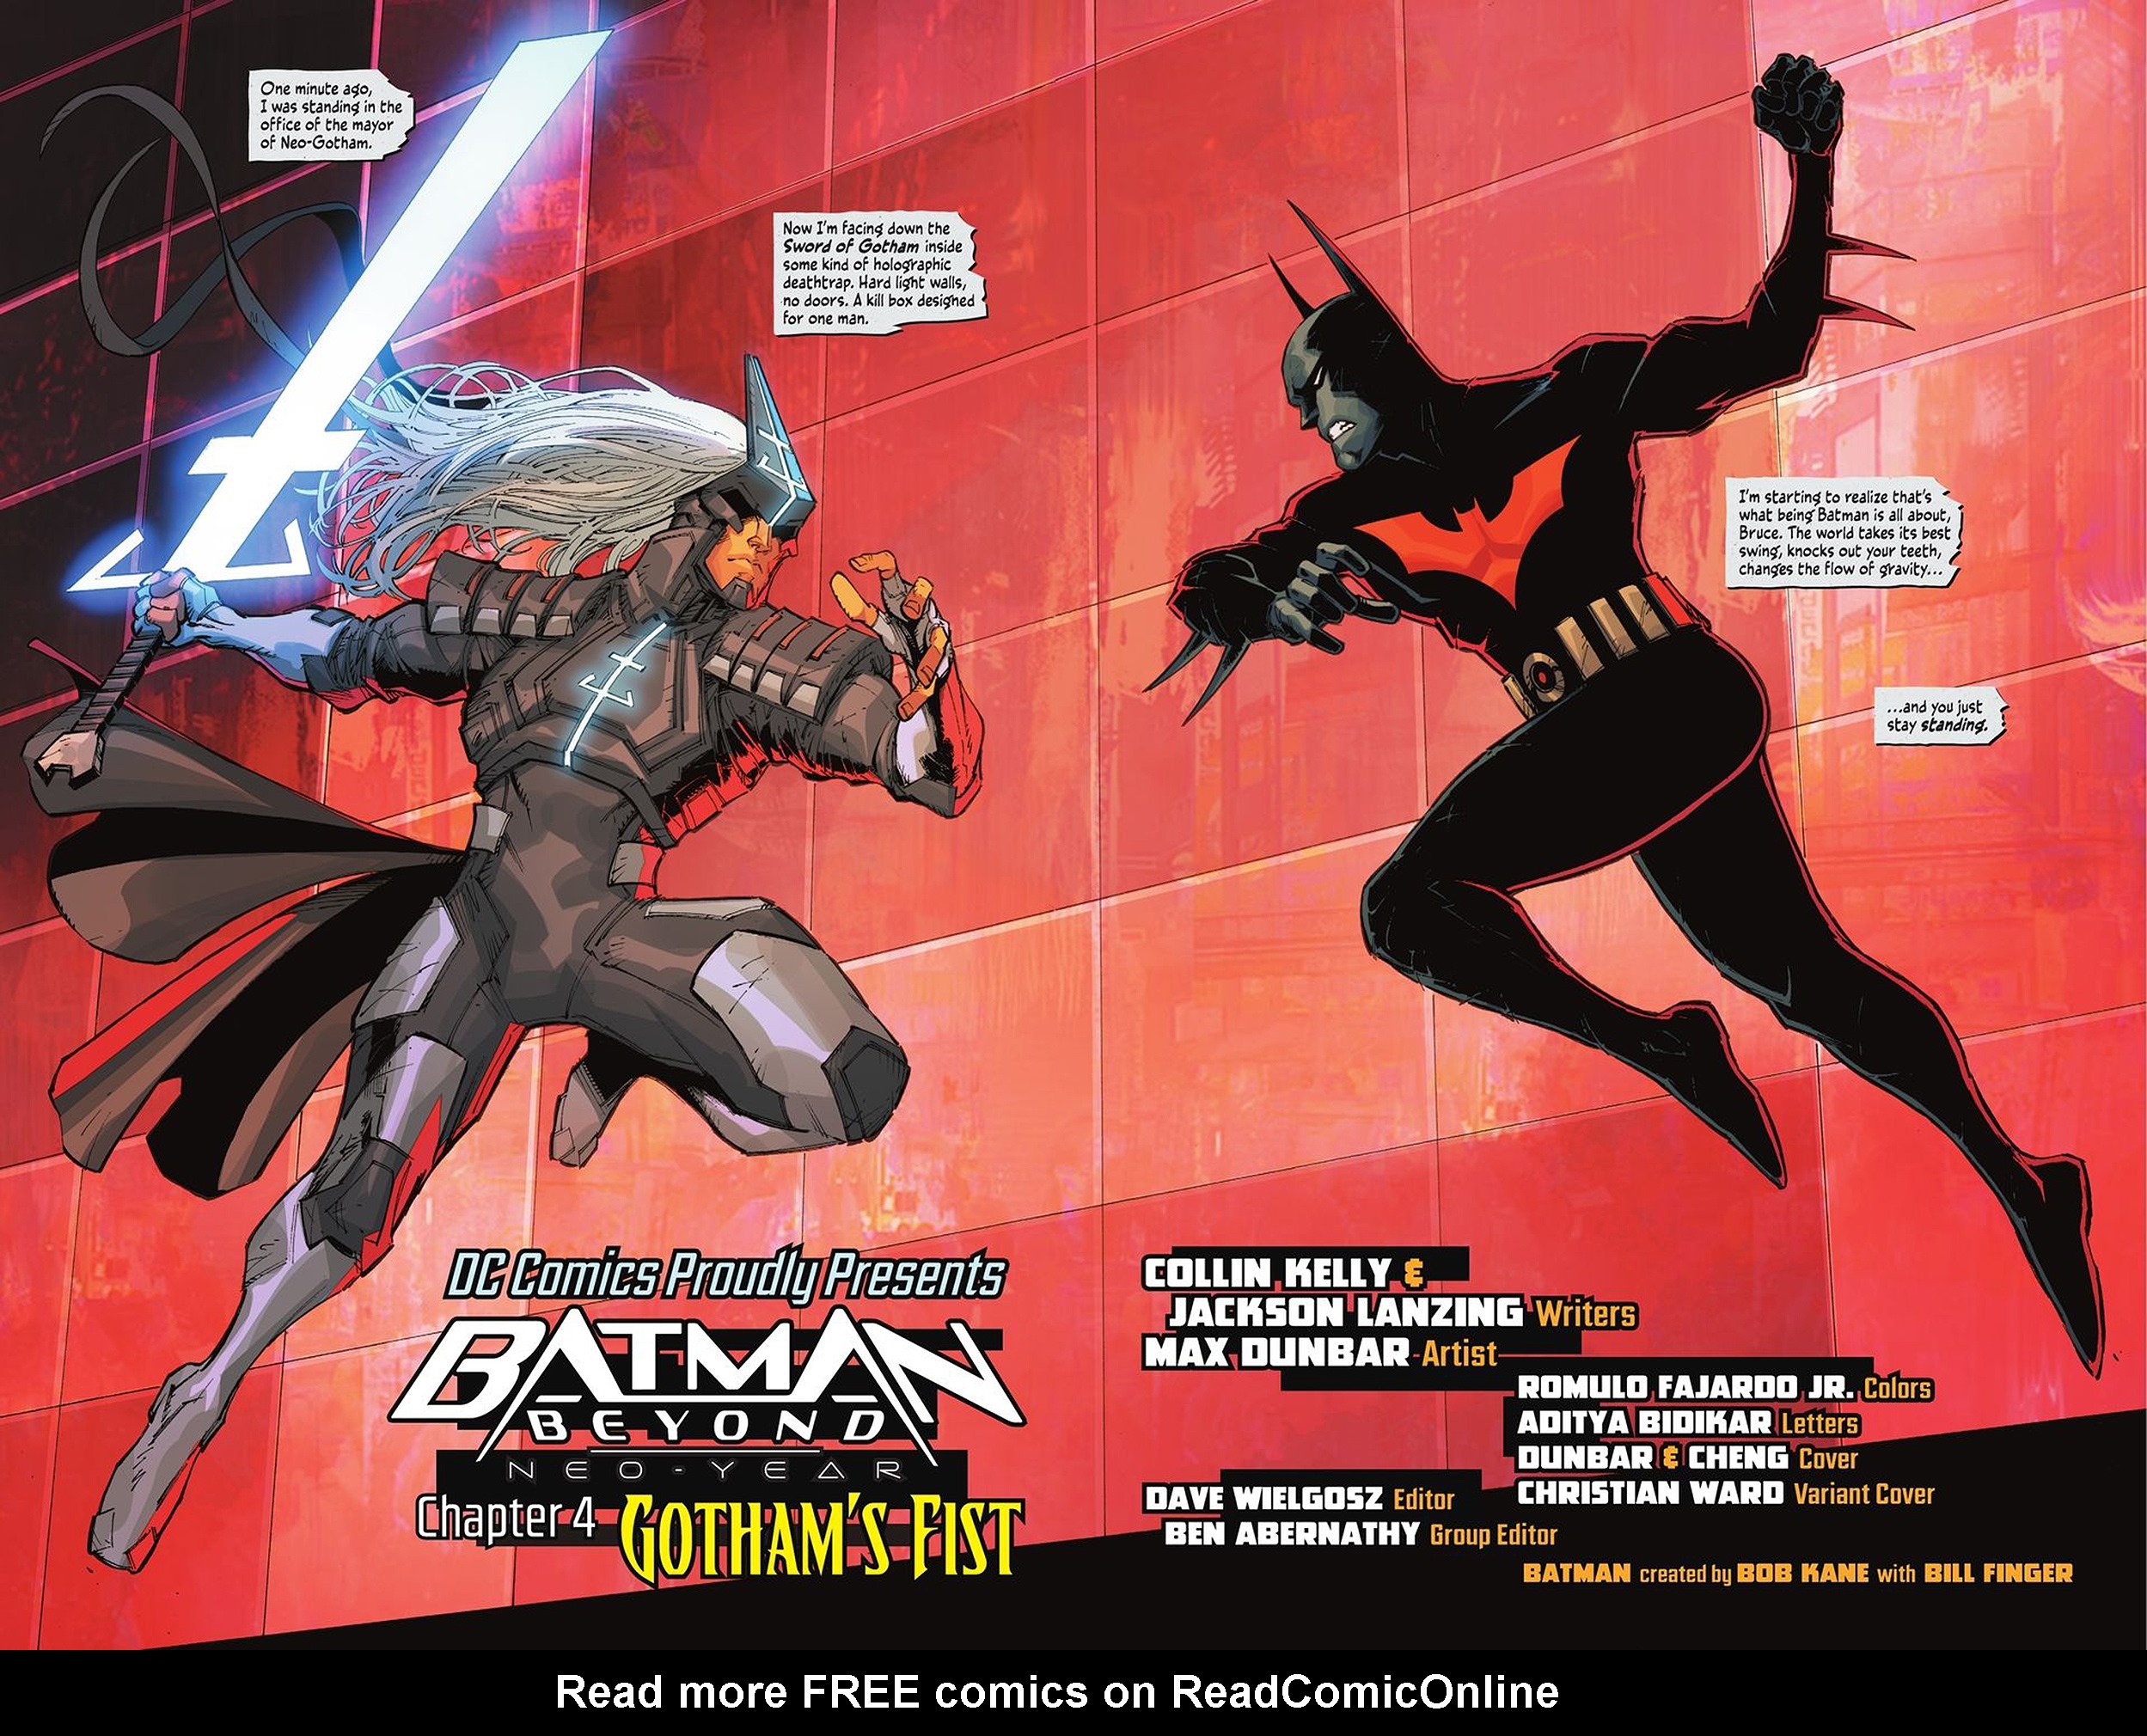 Read online Batman Beyond: Neo-Year comic -  Issue #4 - 4